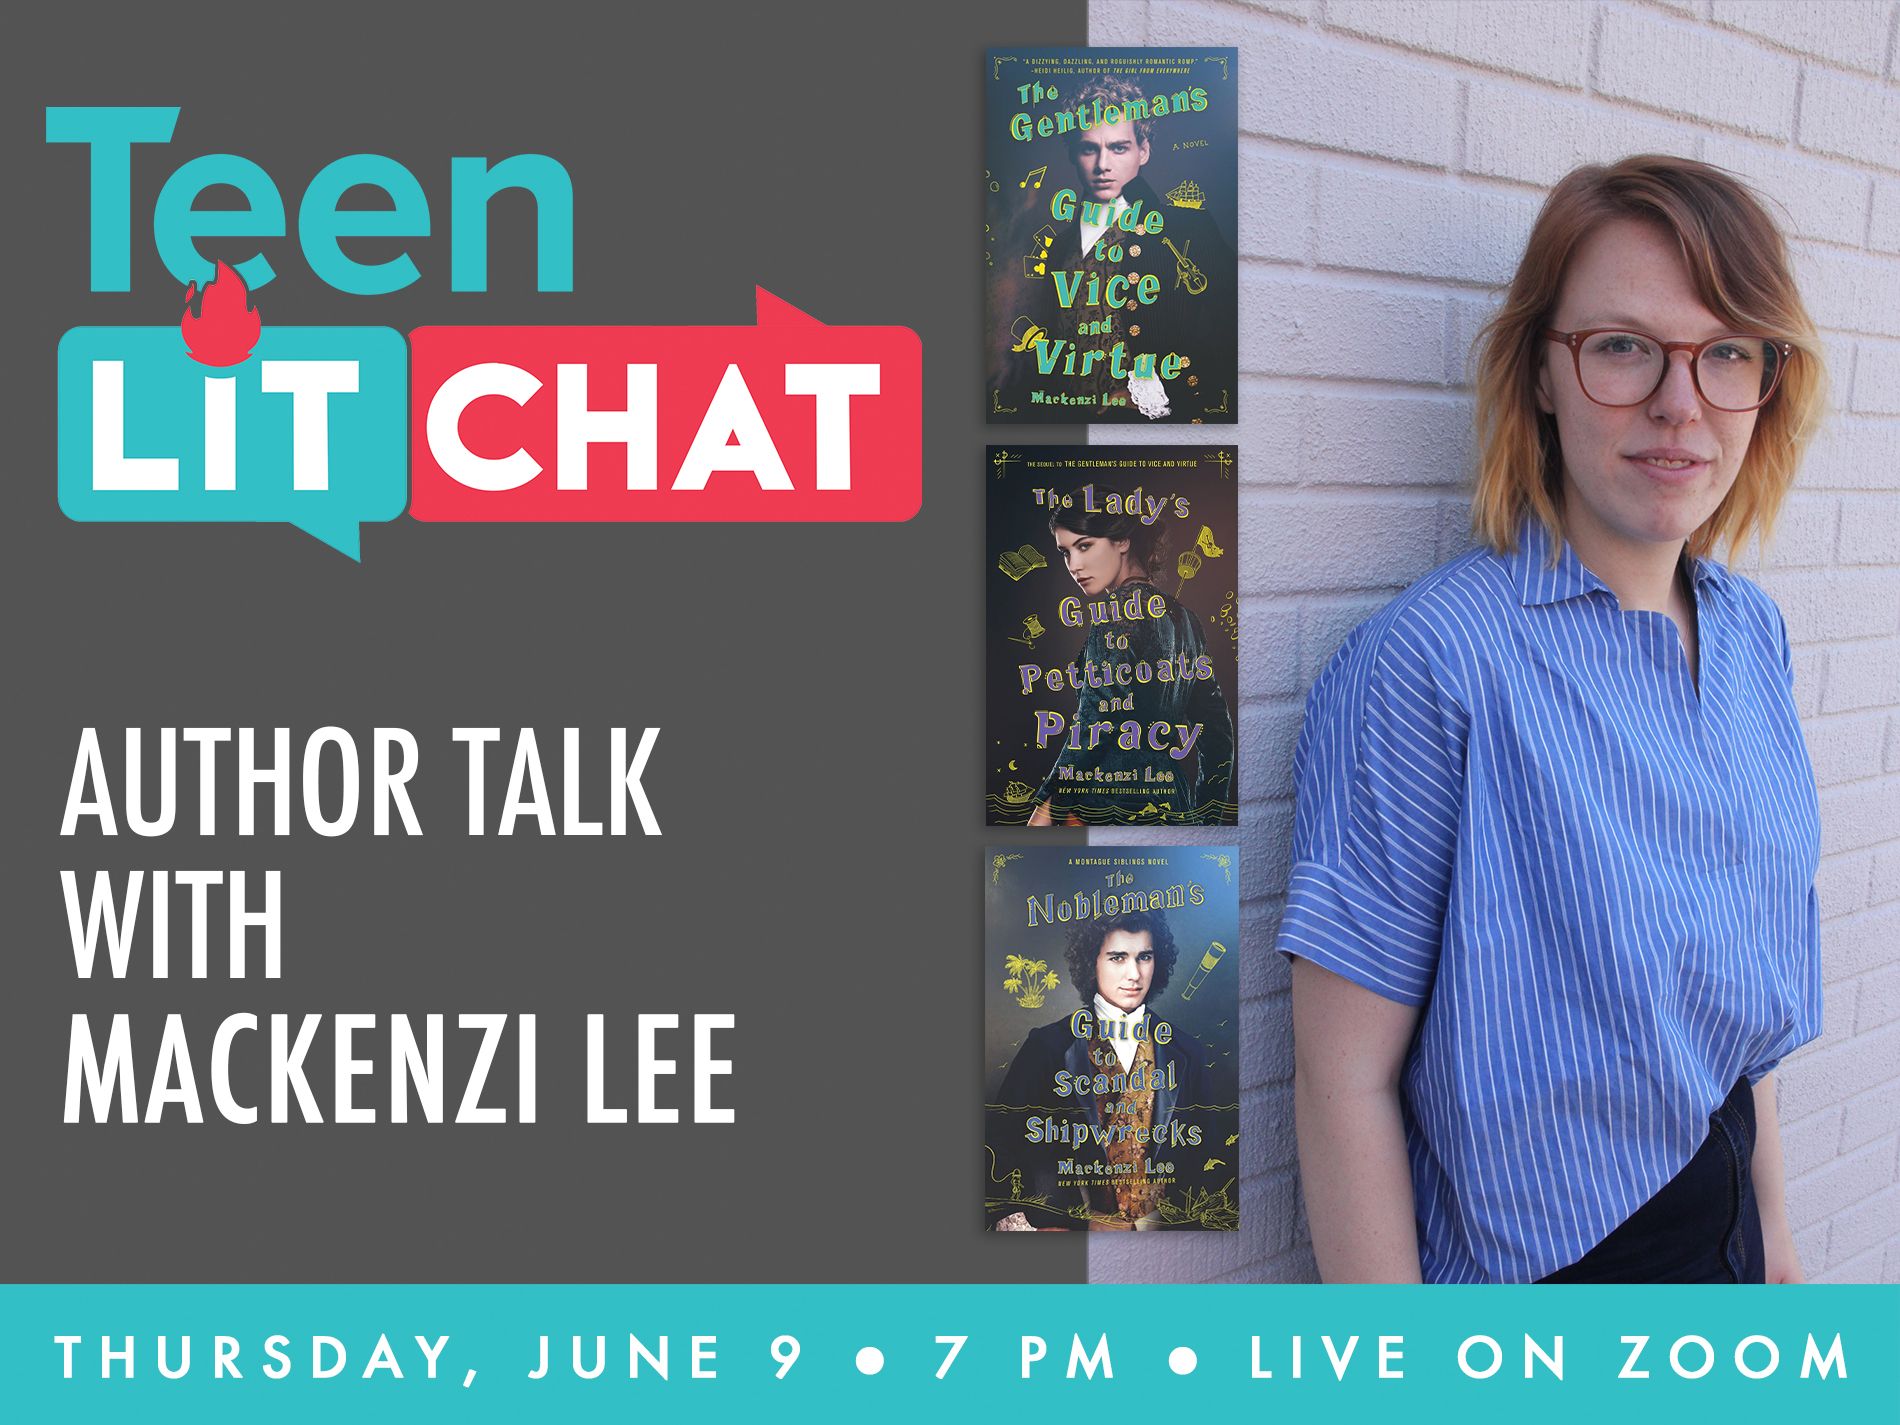 Teen Lit Chat author talk with Mackenzi Lee